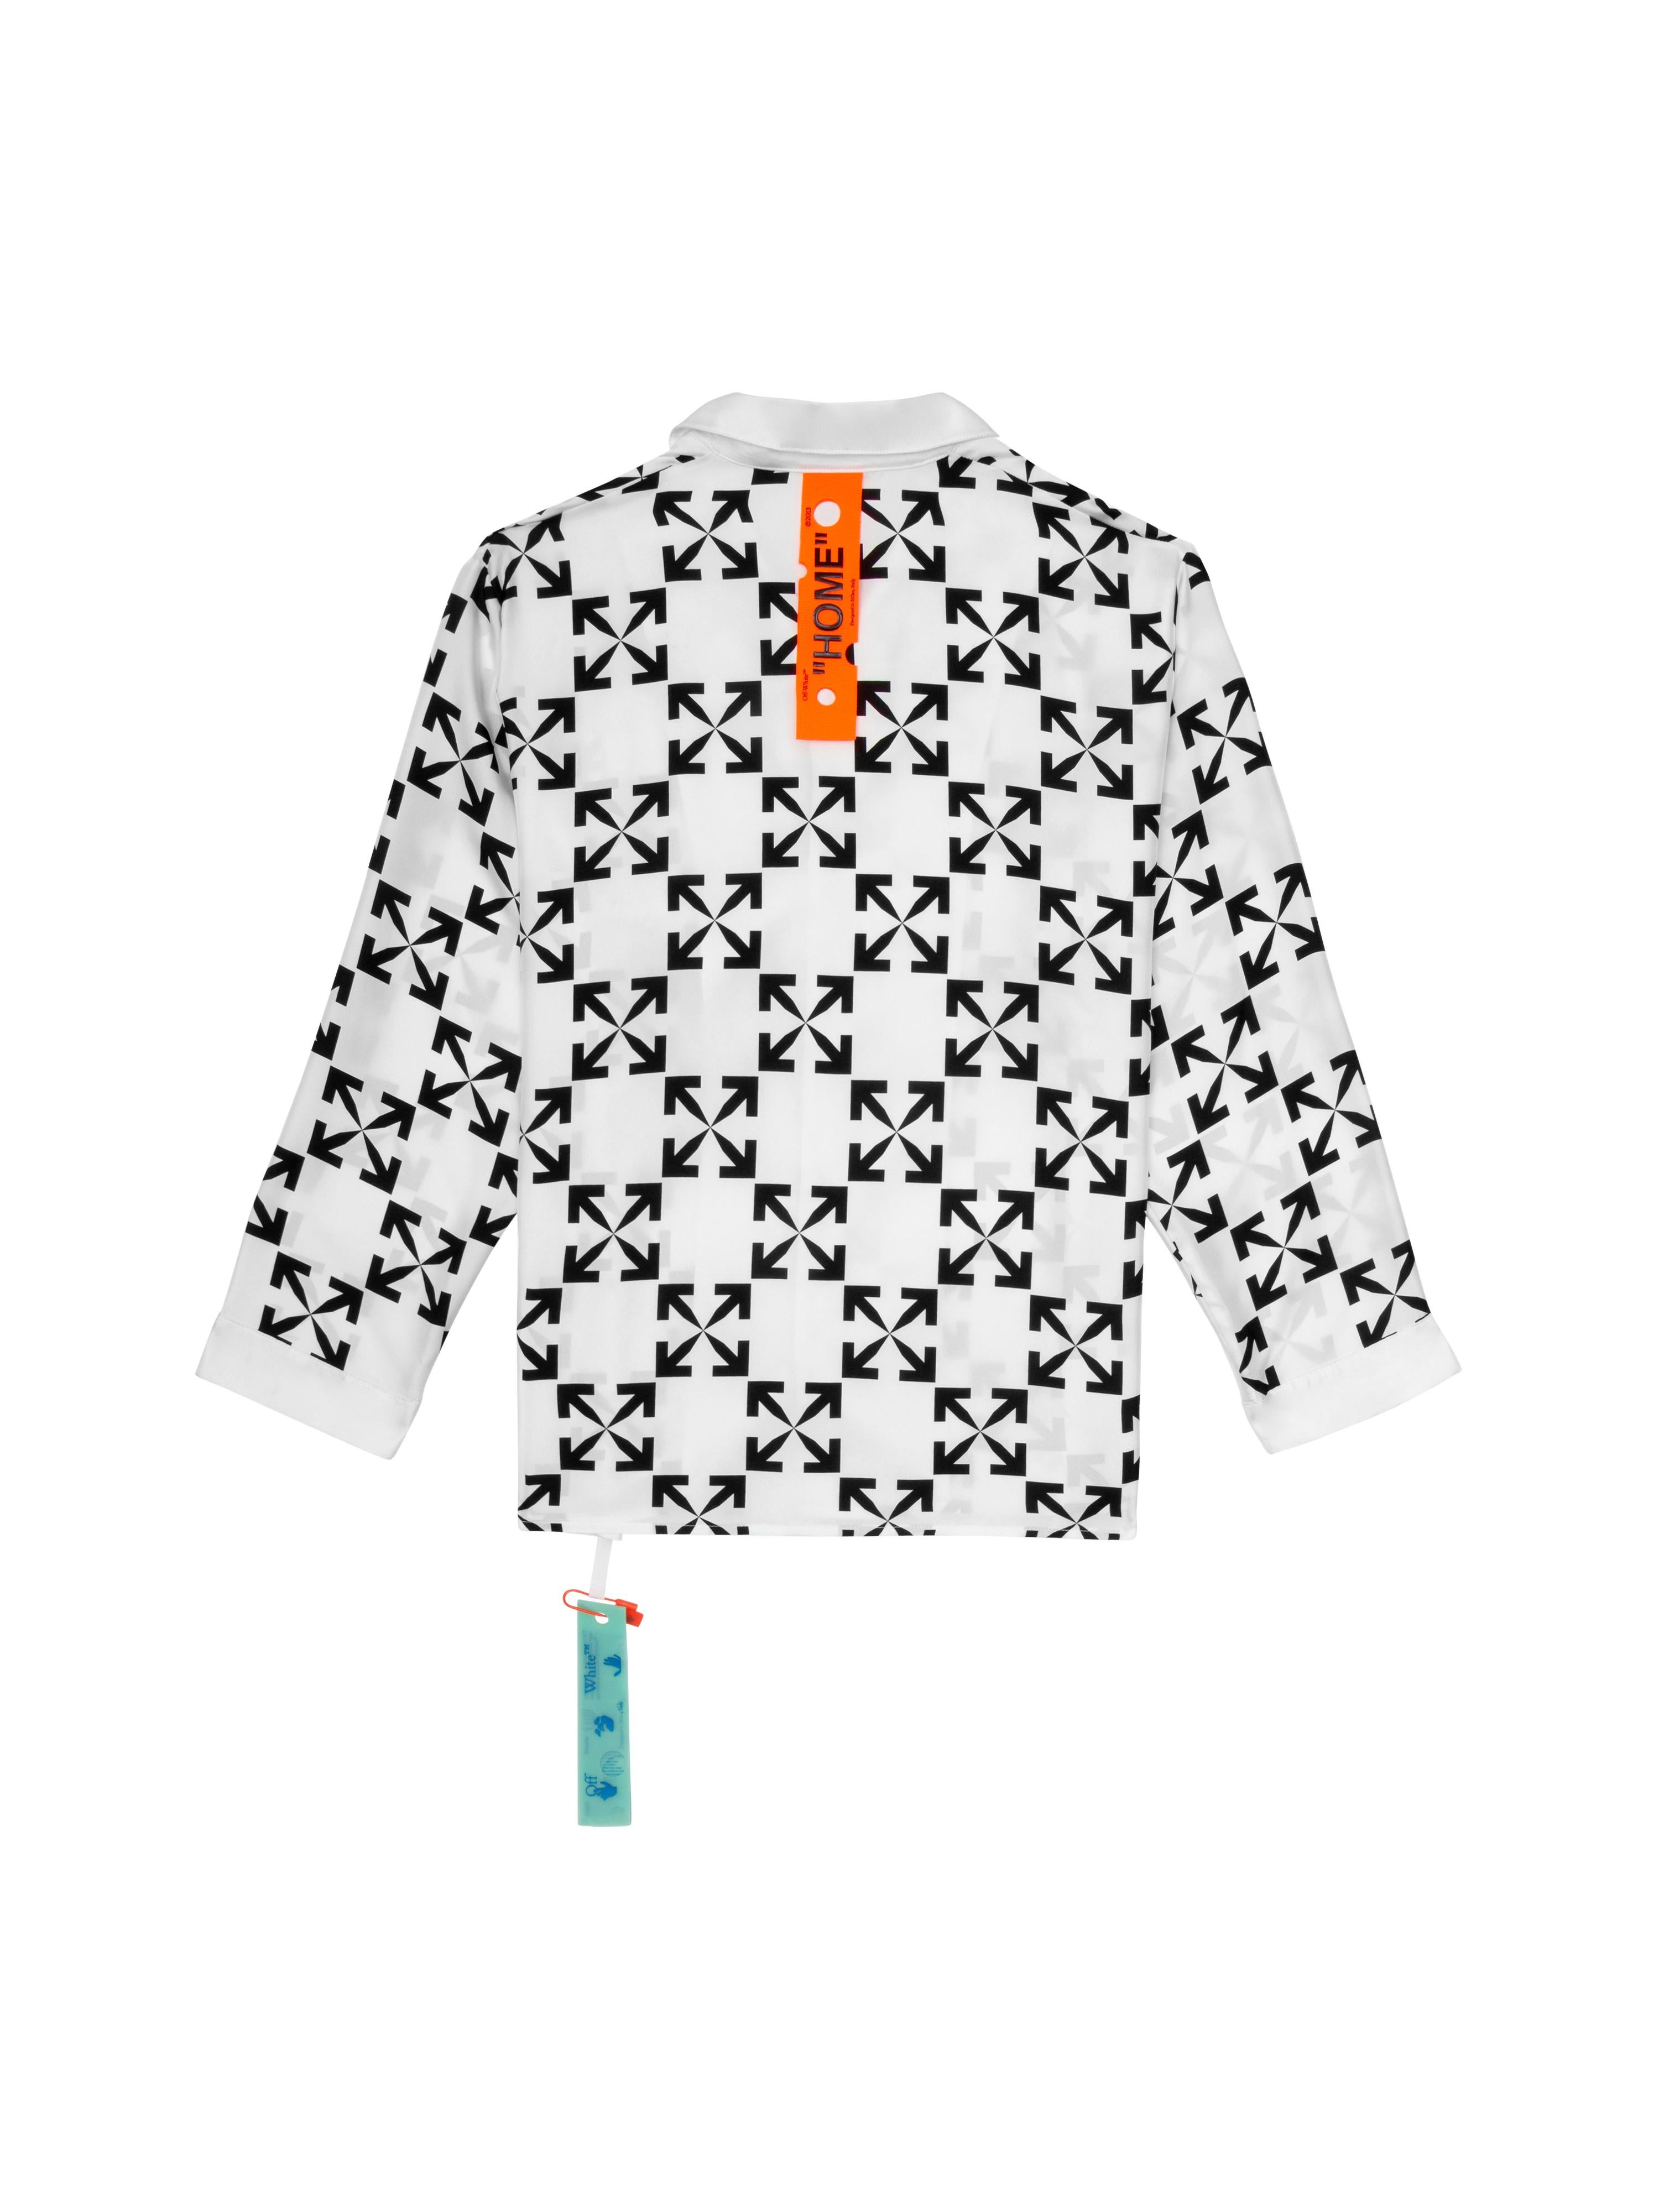 Contemporary Off-White Arrow Pattern Pijama White Black Small For Sale